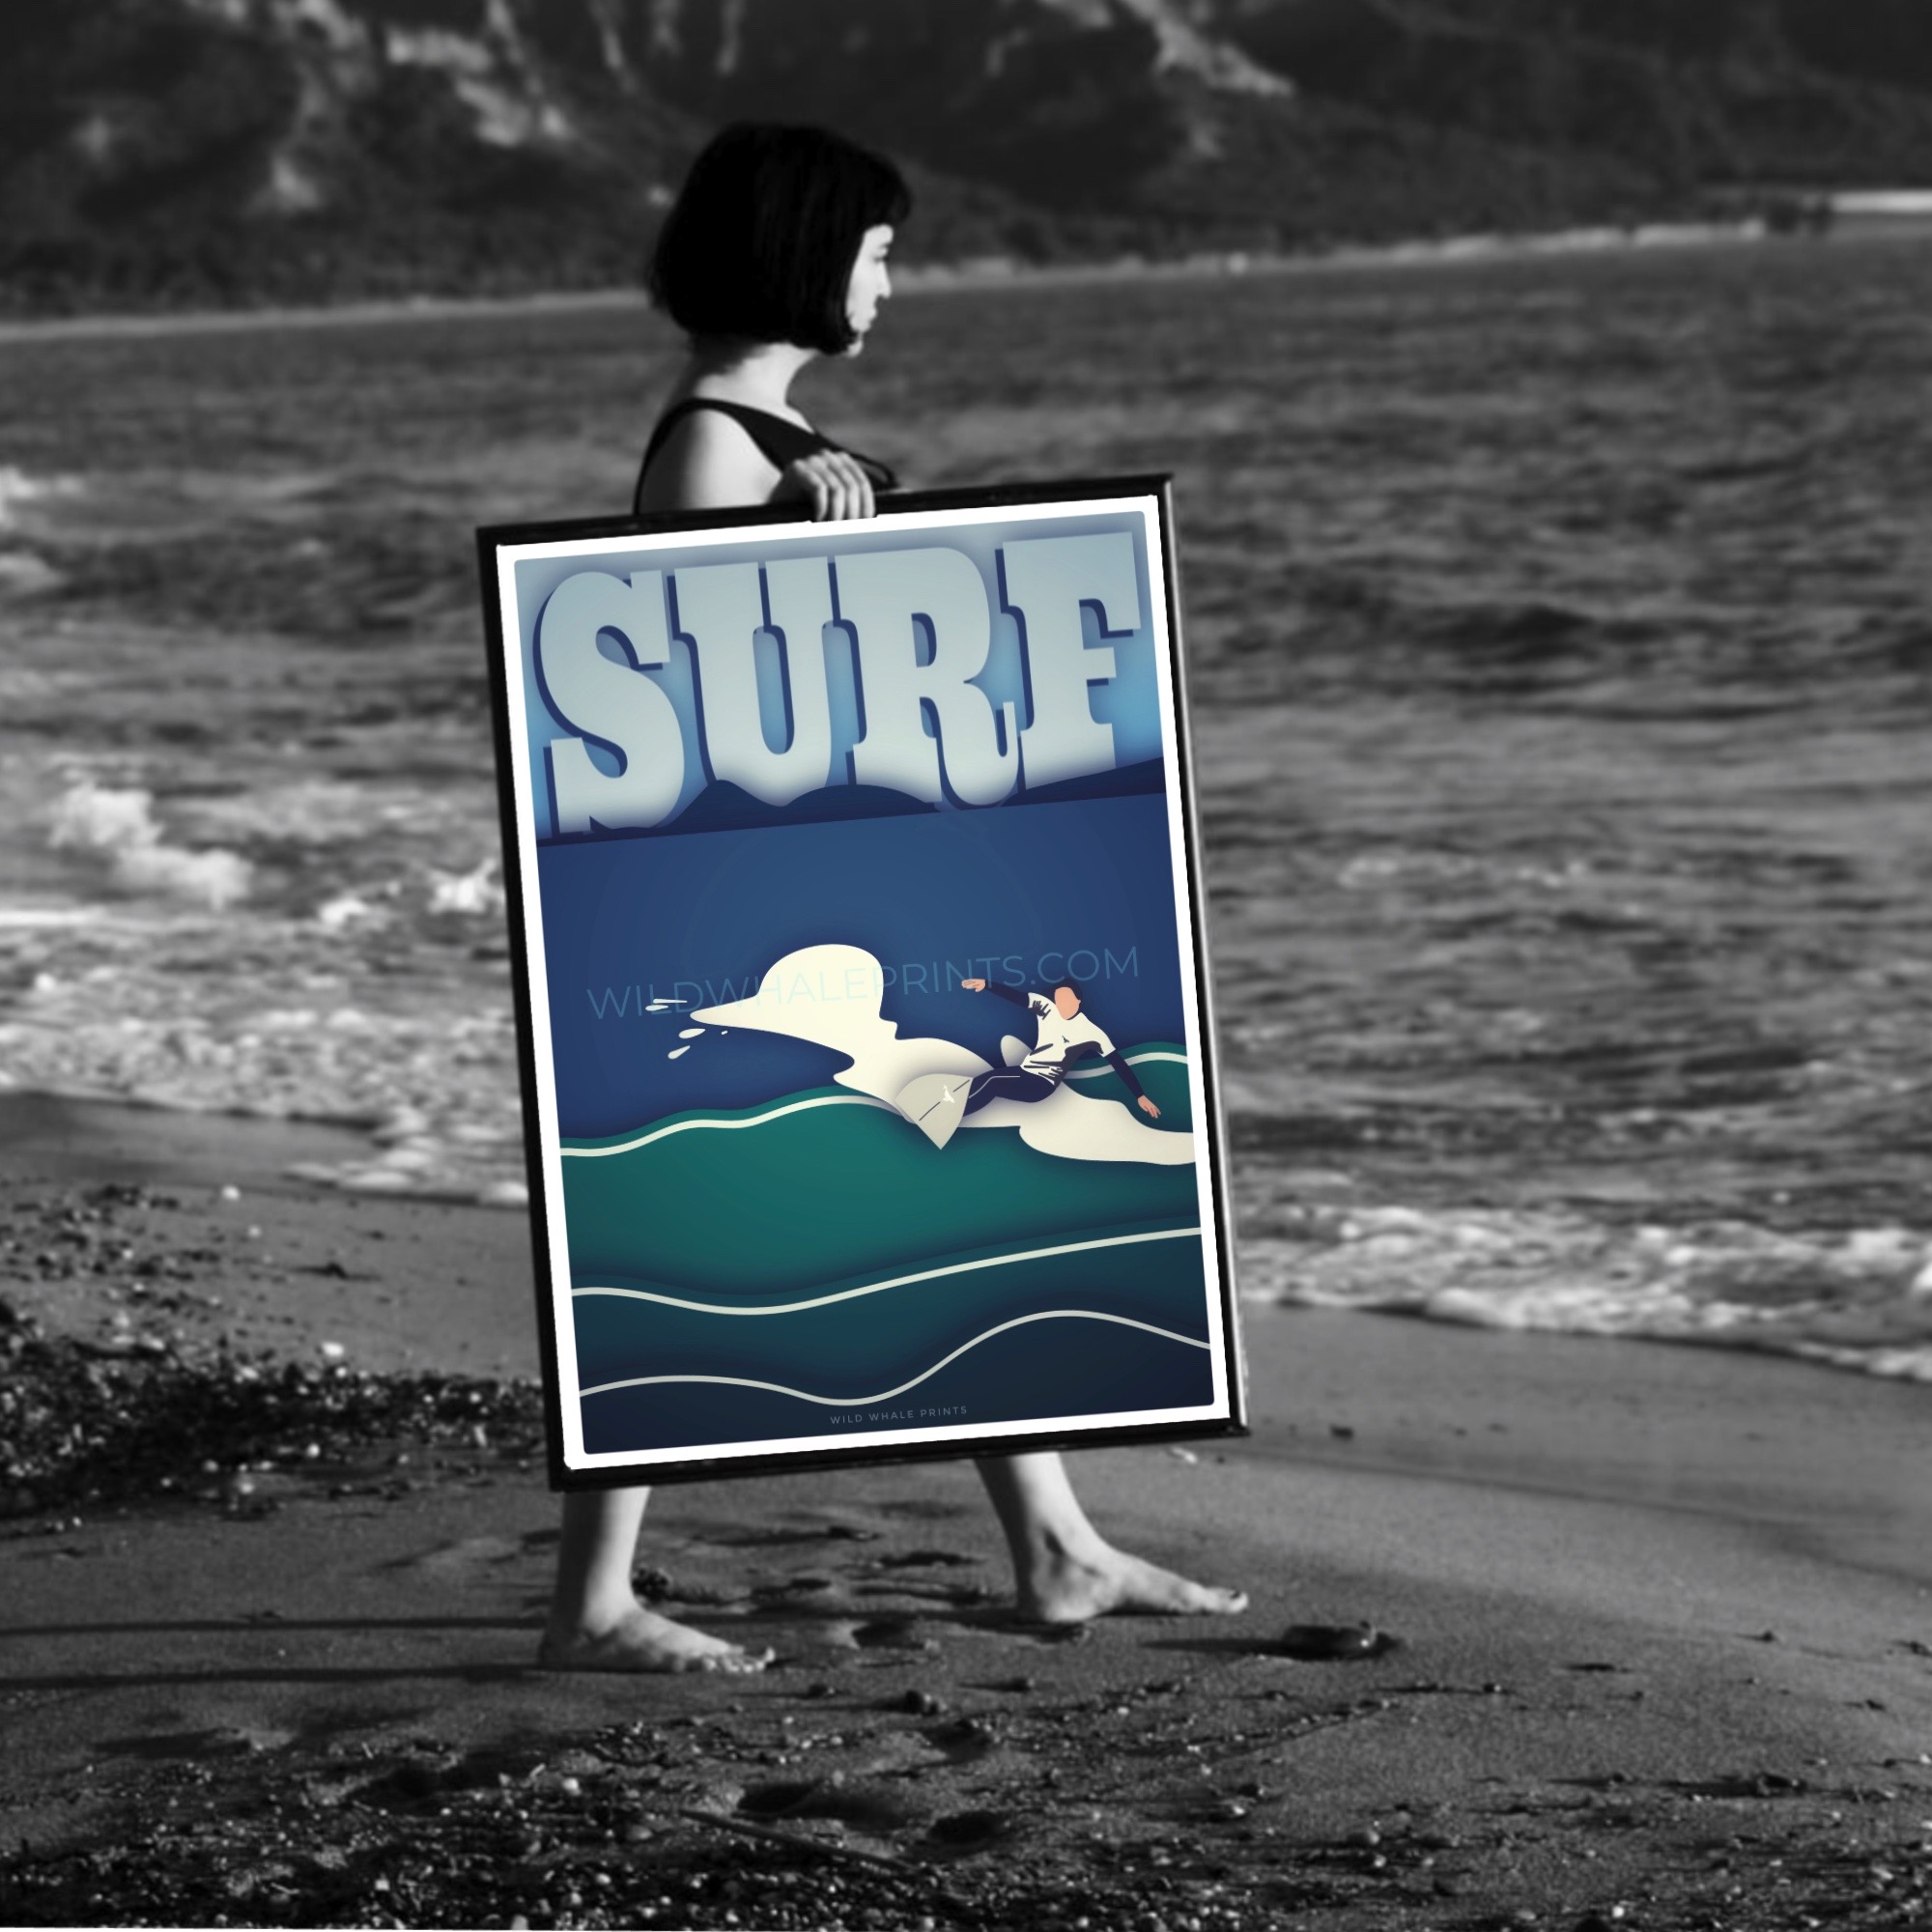 “Surf”